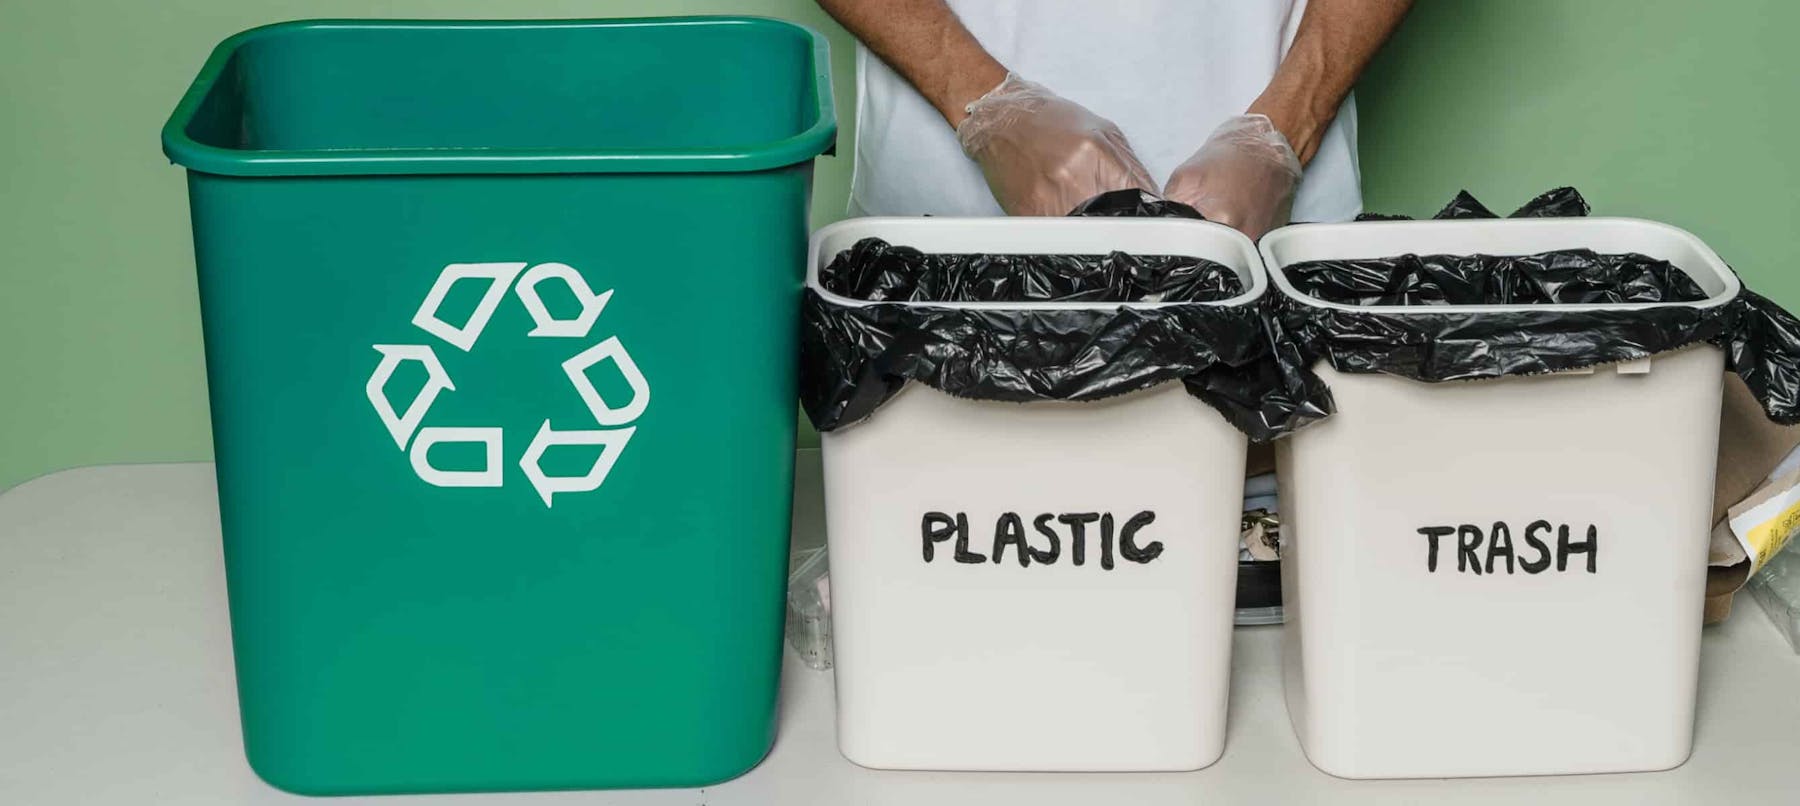 Green plastic trash bin